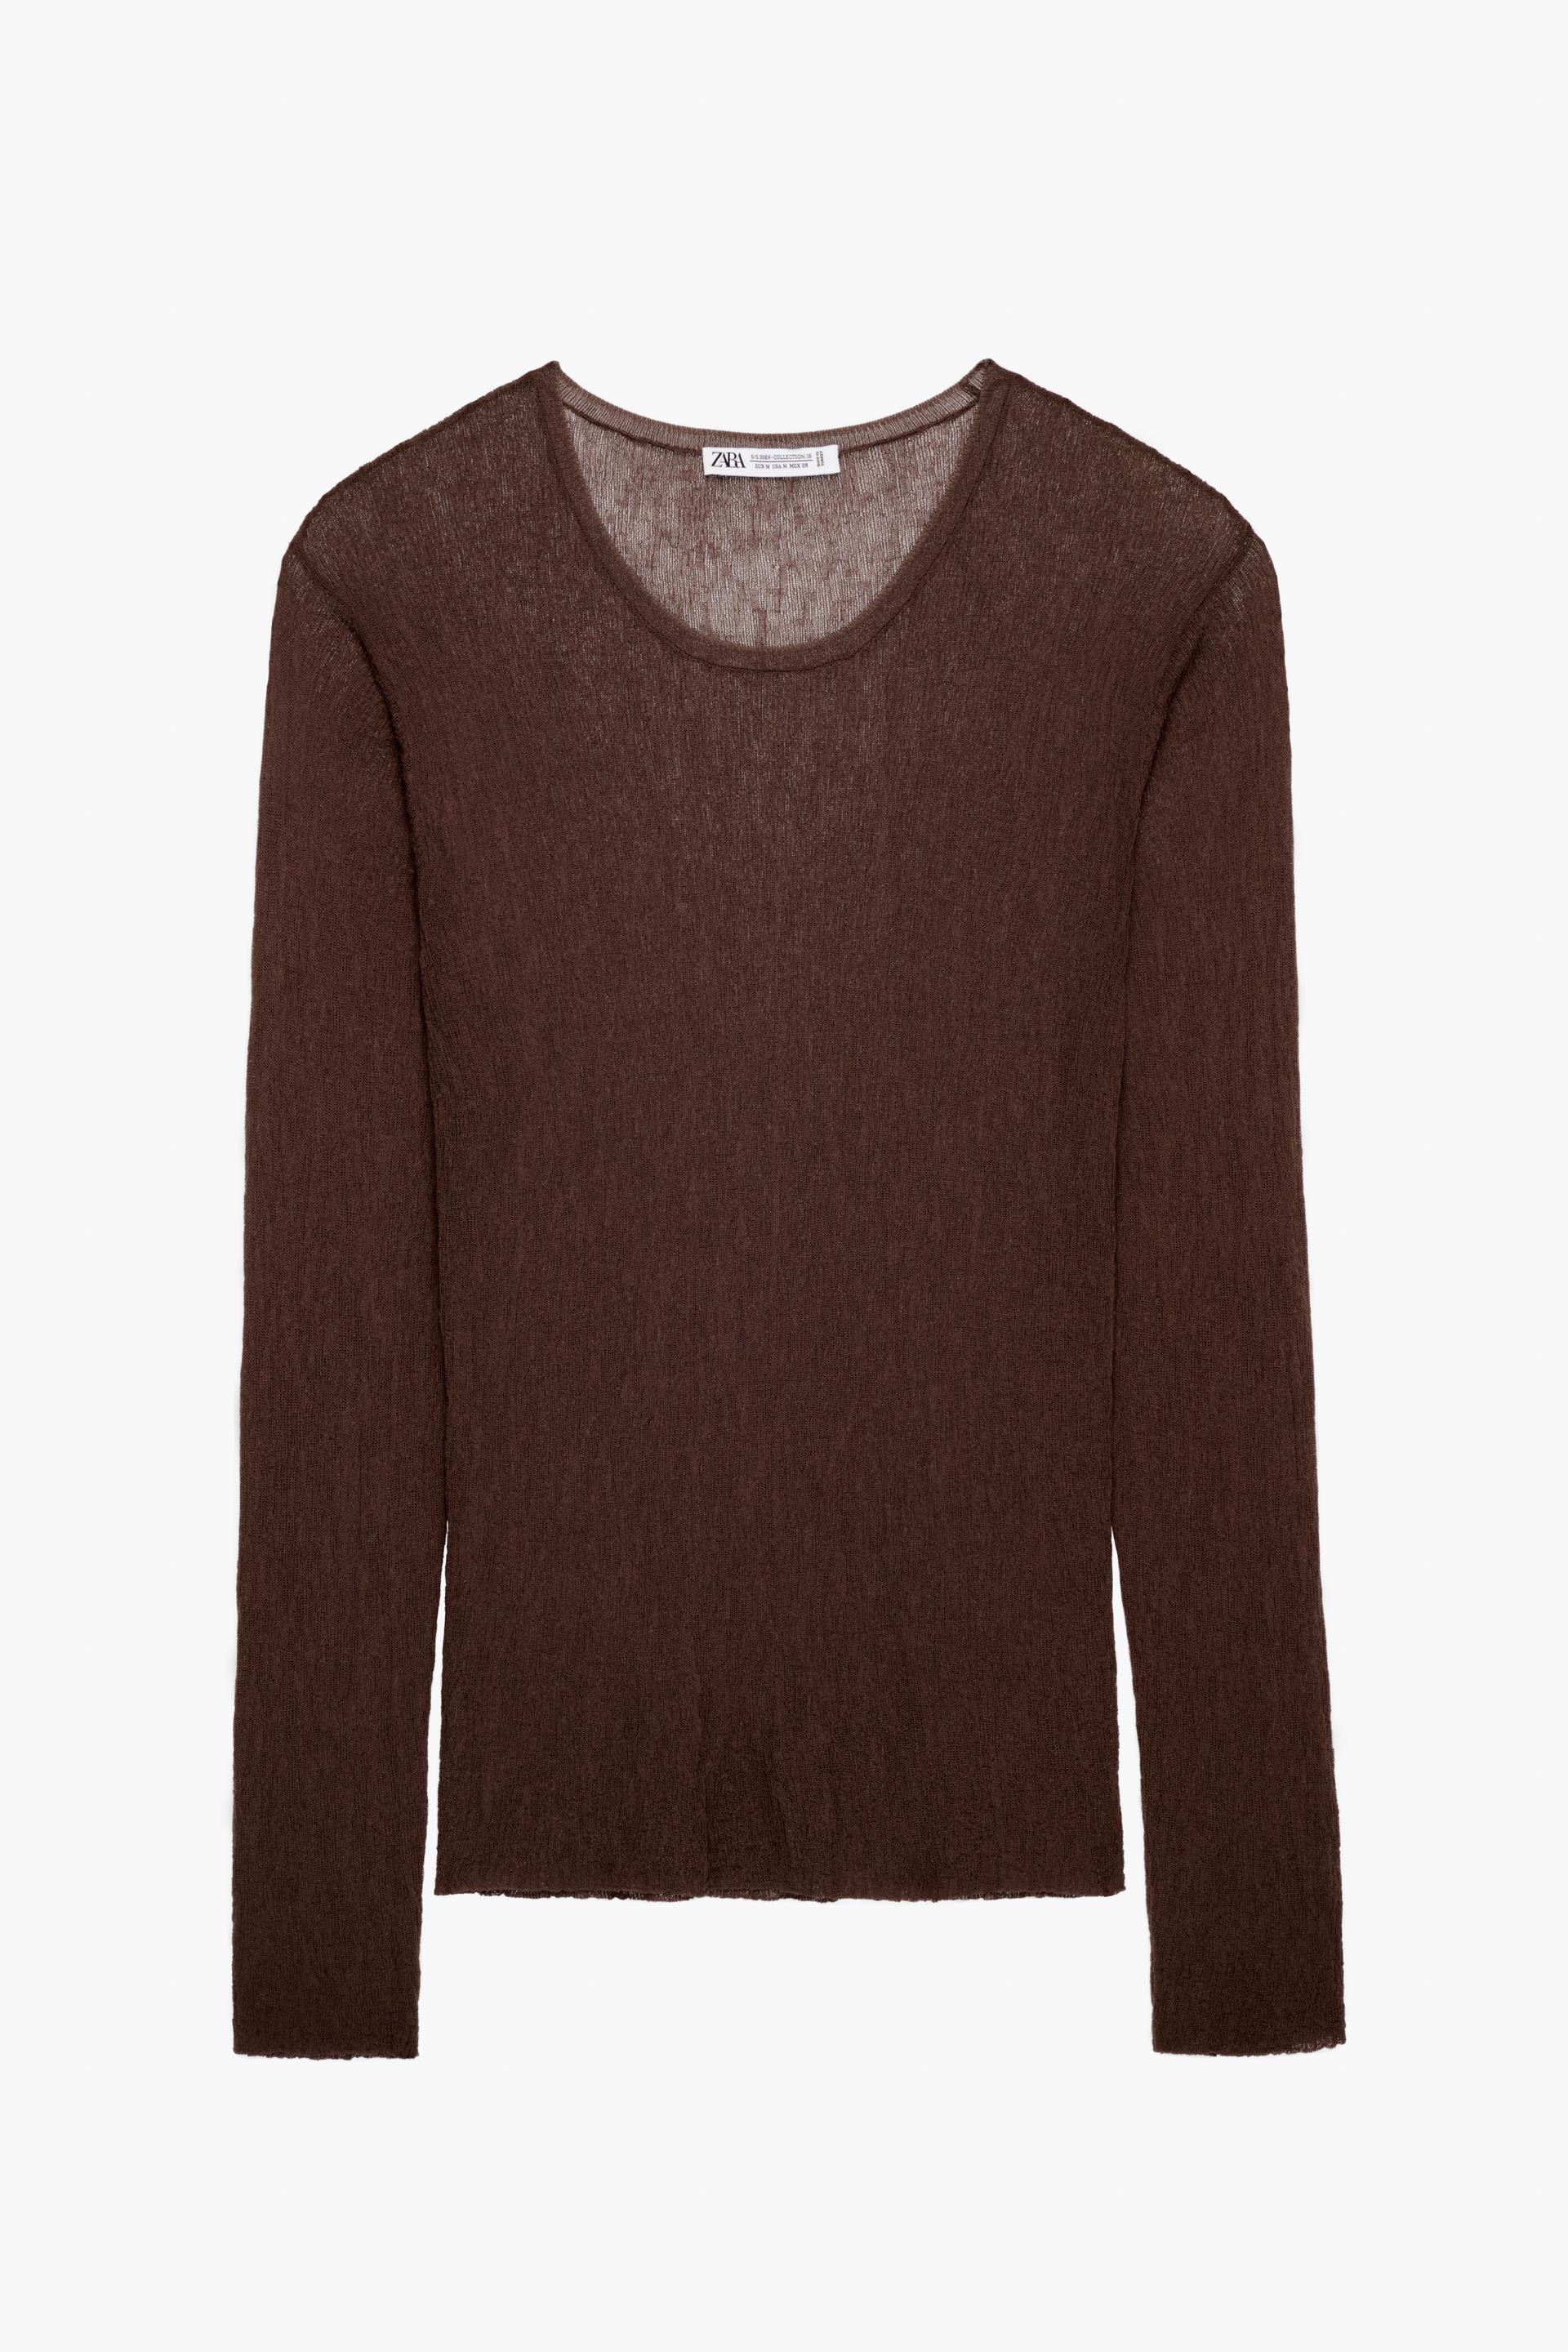 Свитер Zara Textured Limited Edition, коричневый свитер zara textured limited edition светло бежевый